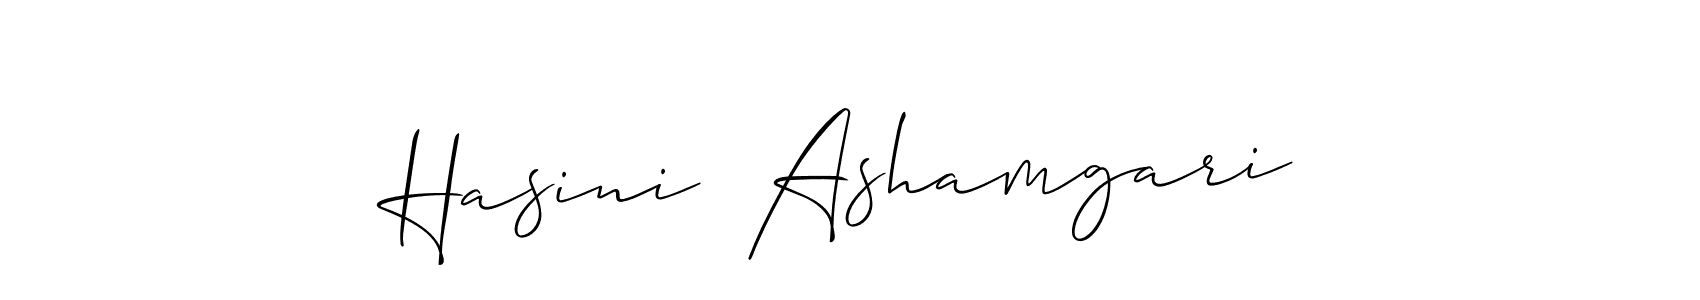 Make a beautiful signature design for name Hasini  Ashamgari. Use this online signature maker to create a handwritten signature for free. Hasini  Ashamgari signature style 2 images and pictures png